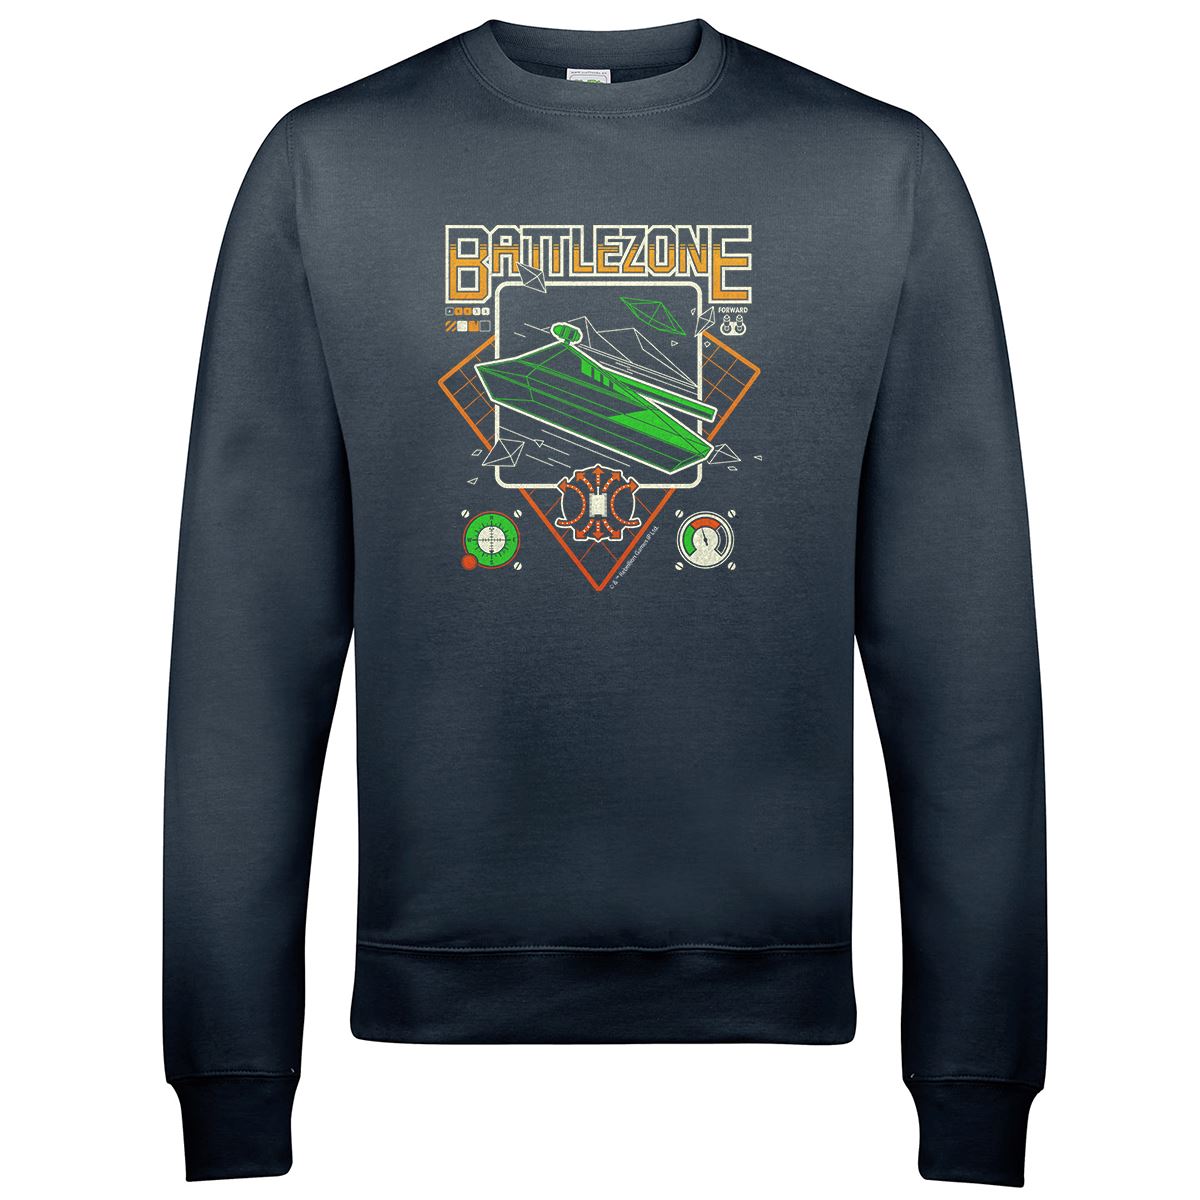 Battlezone Retro Gaming Sweatshirt Sweatshirt Seven Squared Small Storm Grey 